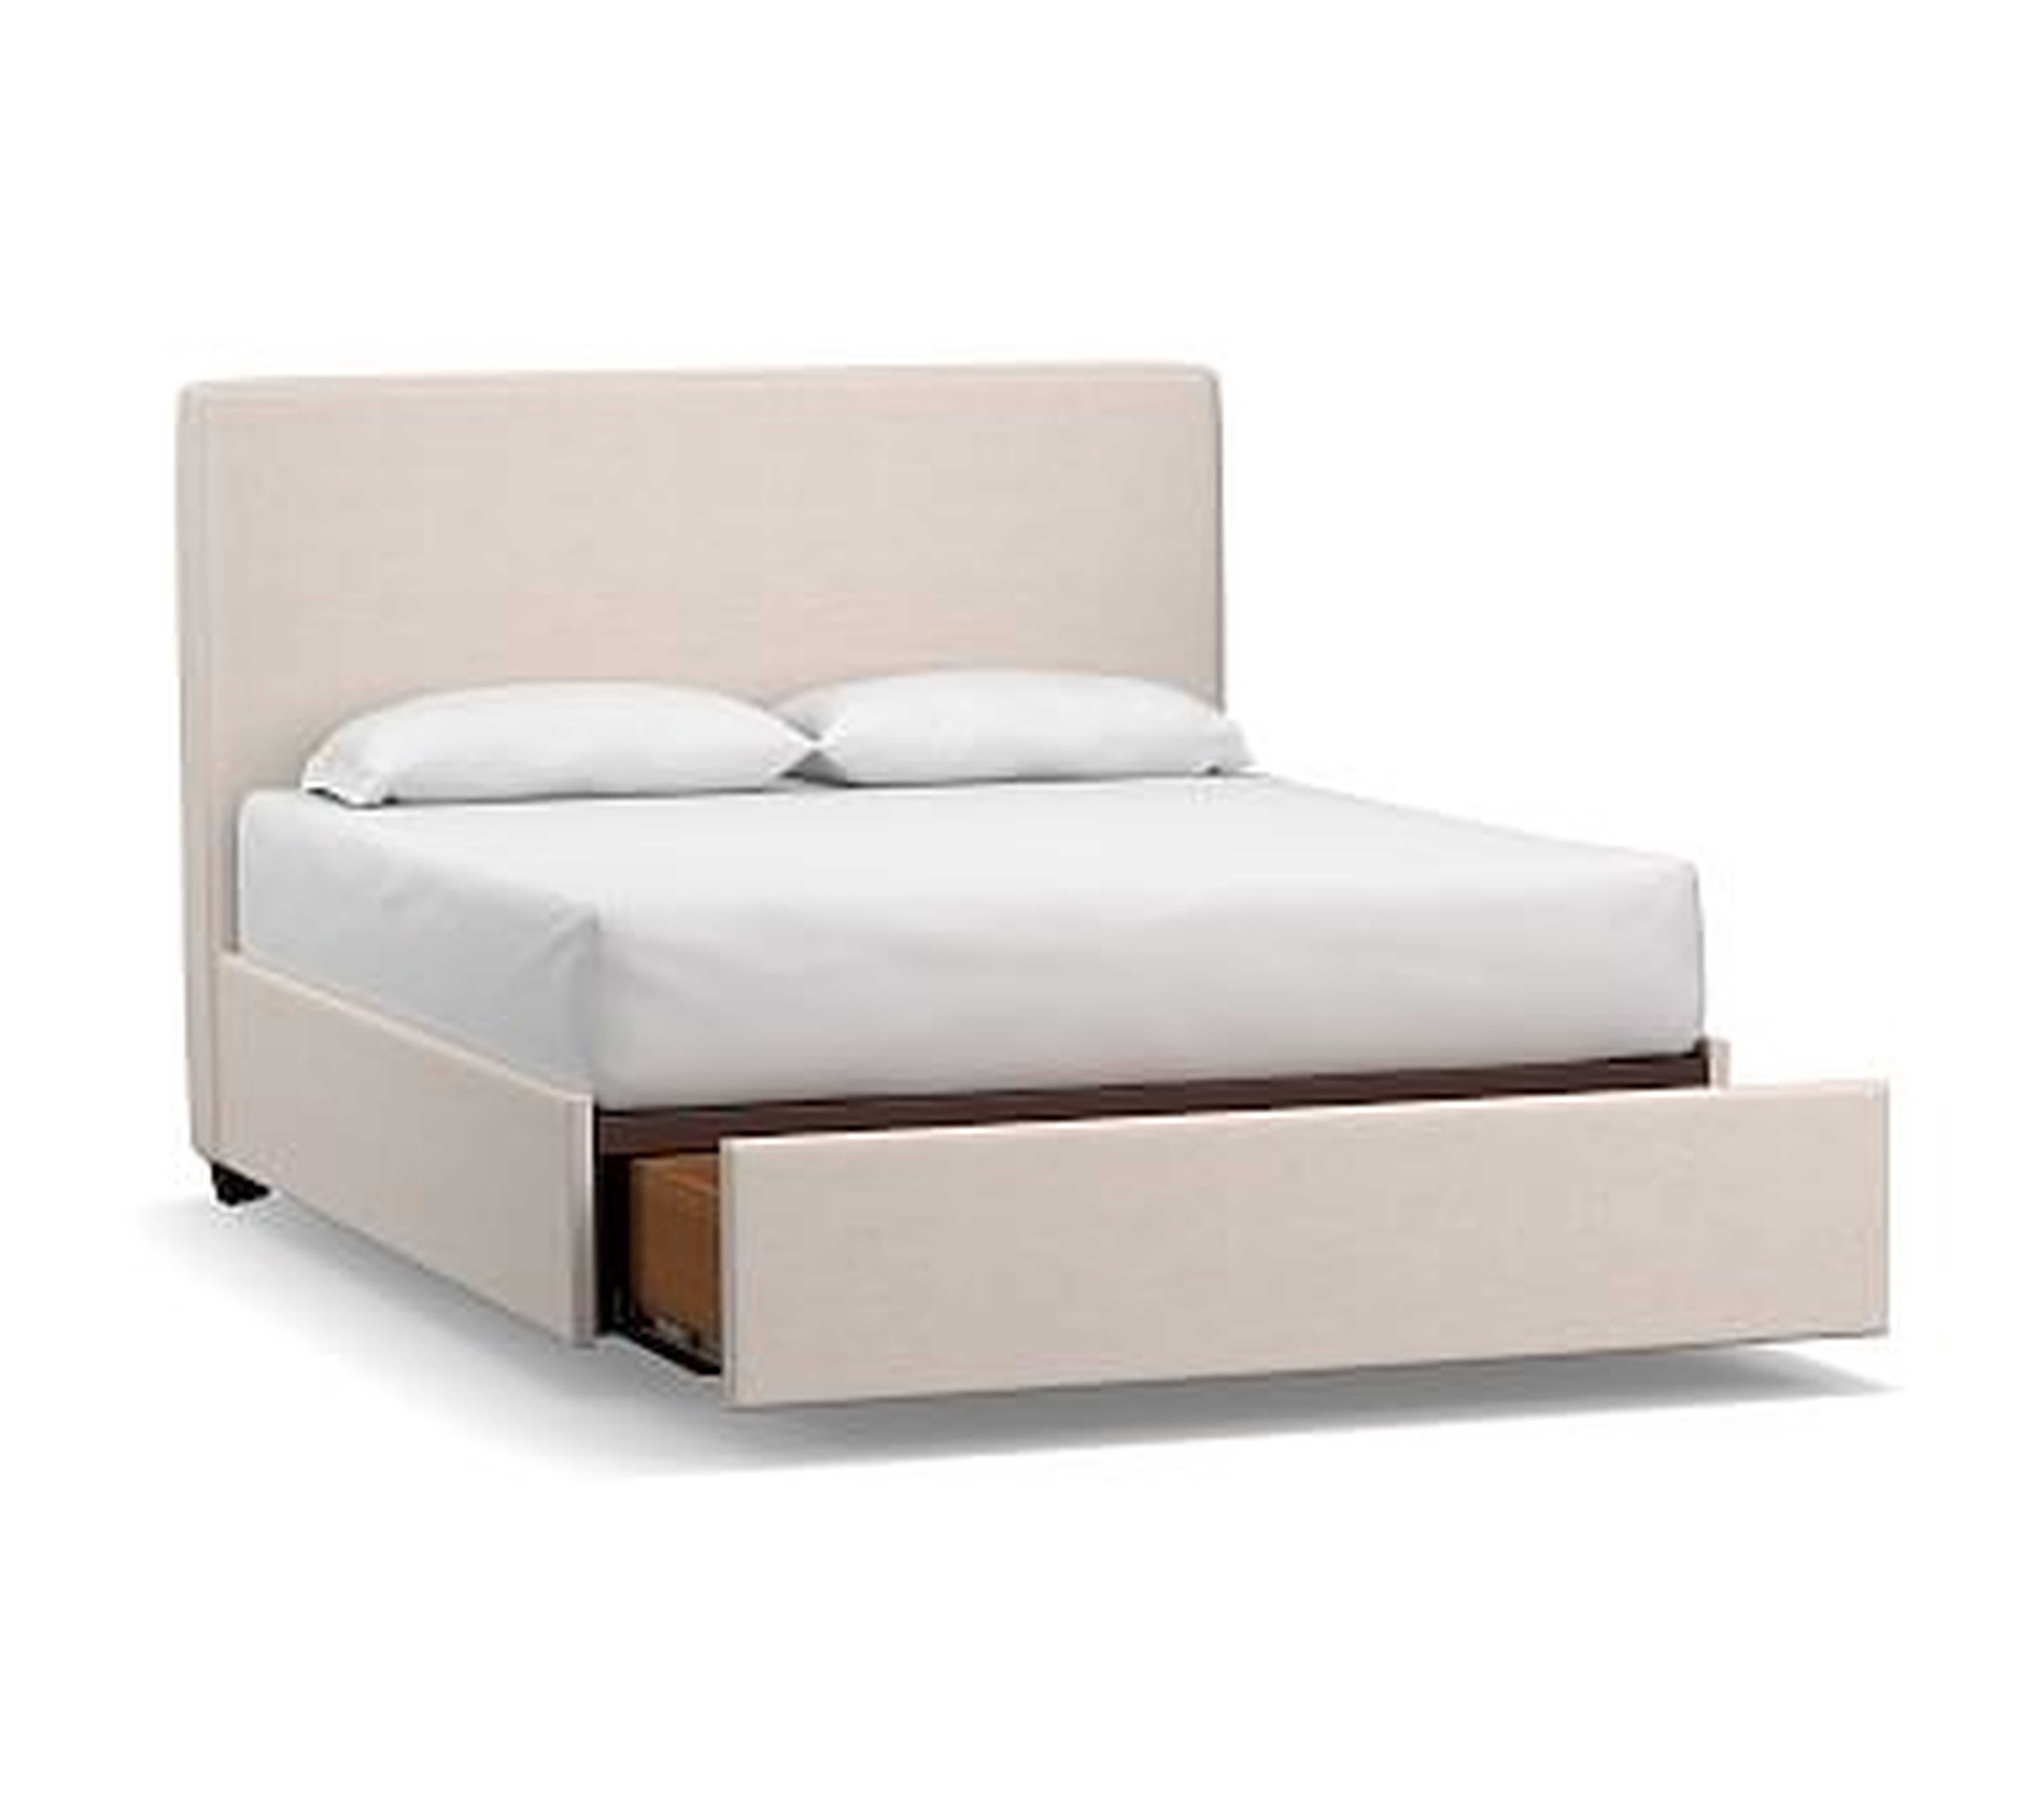 Big Sur Upholstered Headboard with Footboard Storage Platform Bed, King, Premium Performance Basketweave Ivory - Pottery Barn